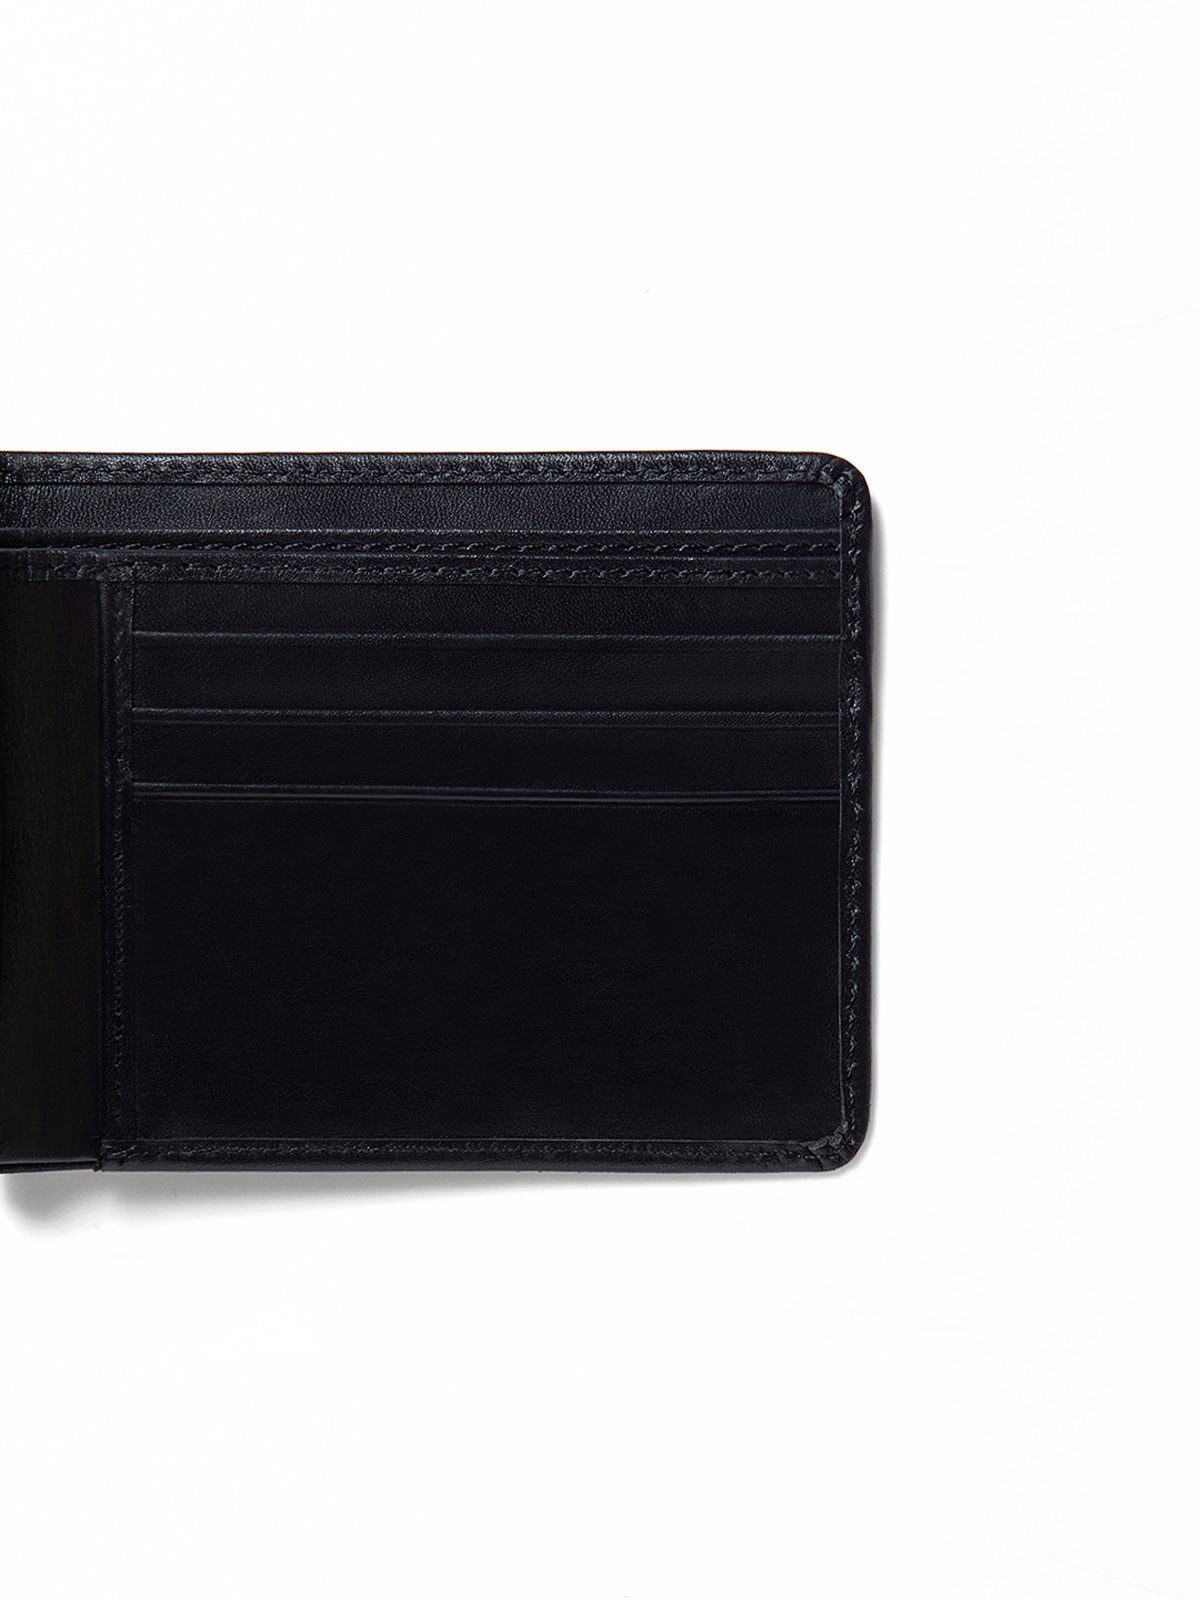 Black Leather Wallet - FAMW23-004